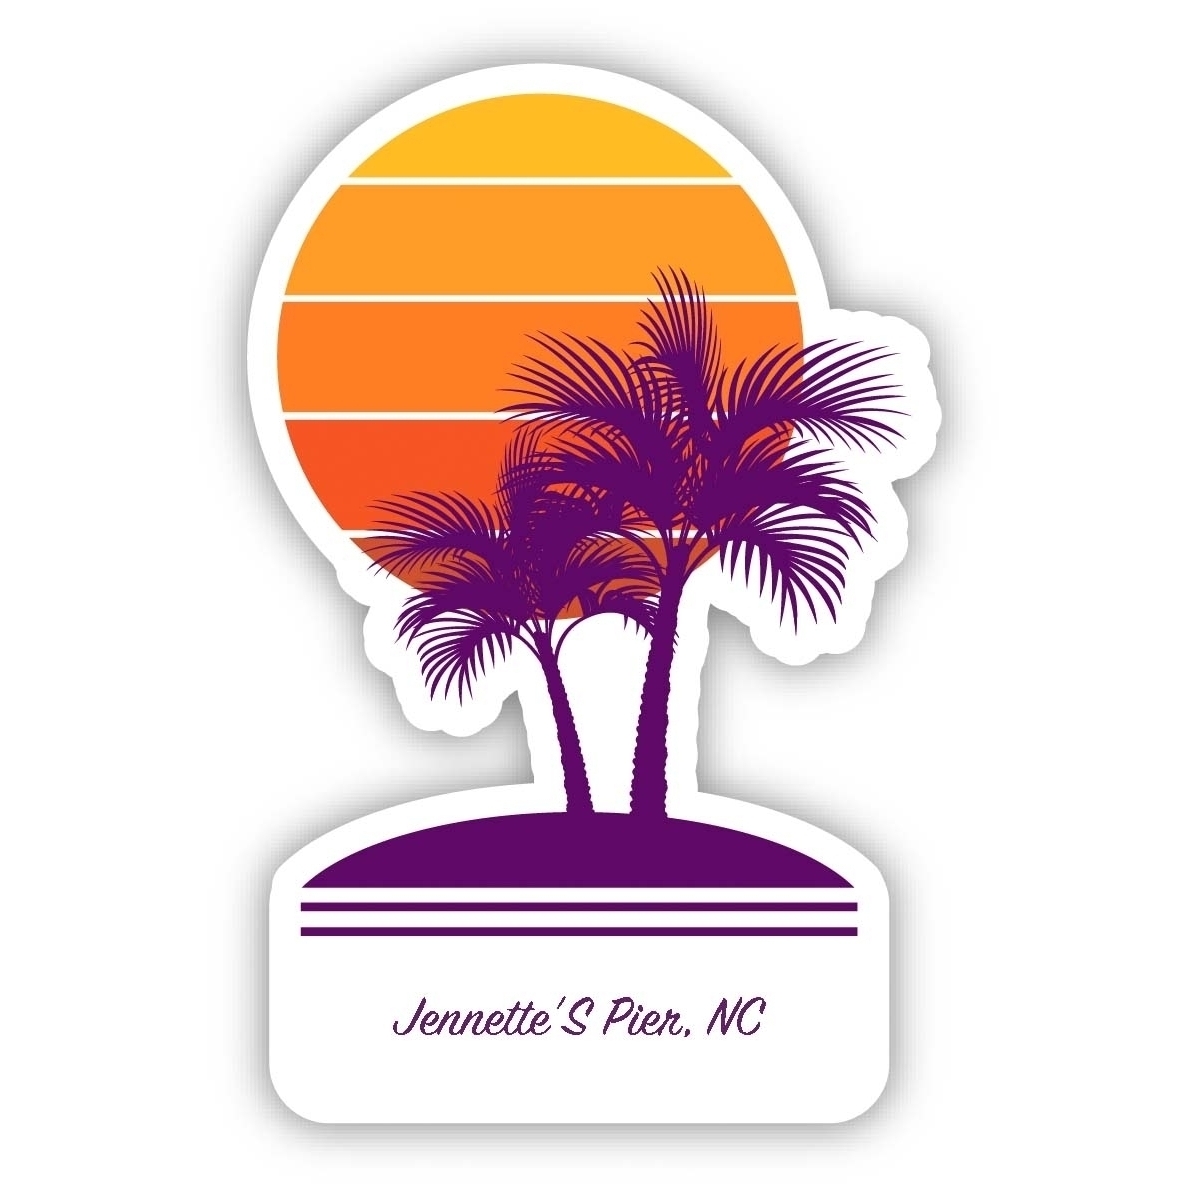 Jennette'S Pier North Carolina Souvenir 4 Inch Vinyl Decal Sticker Palm Design